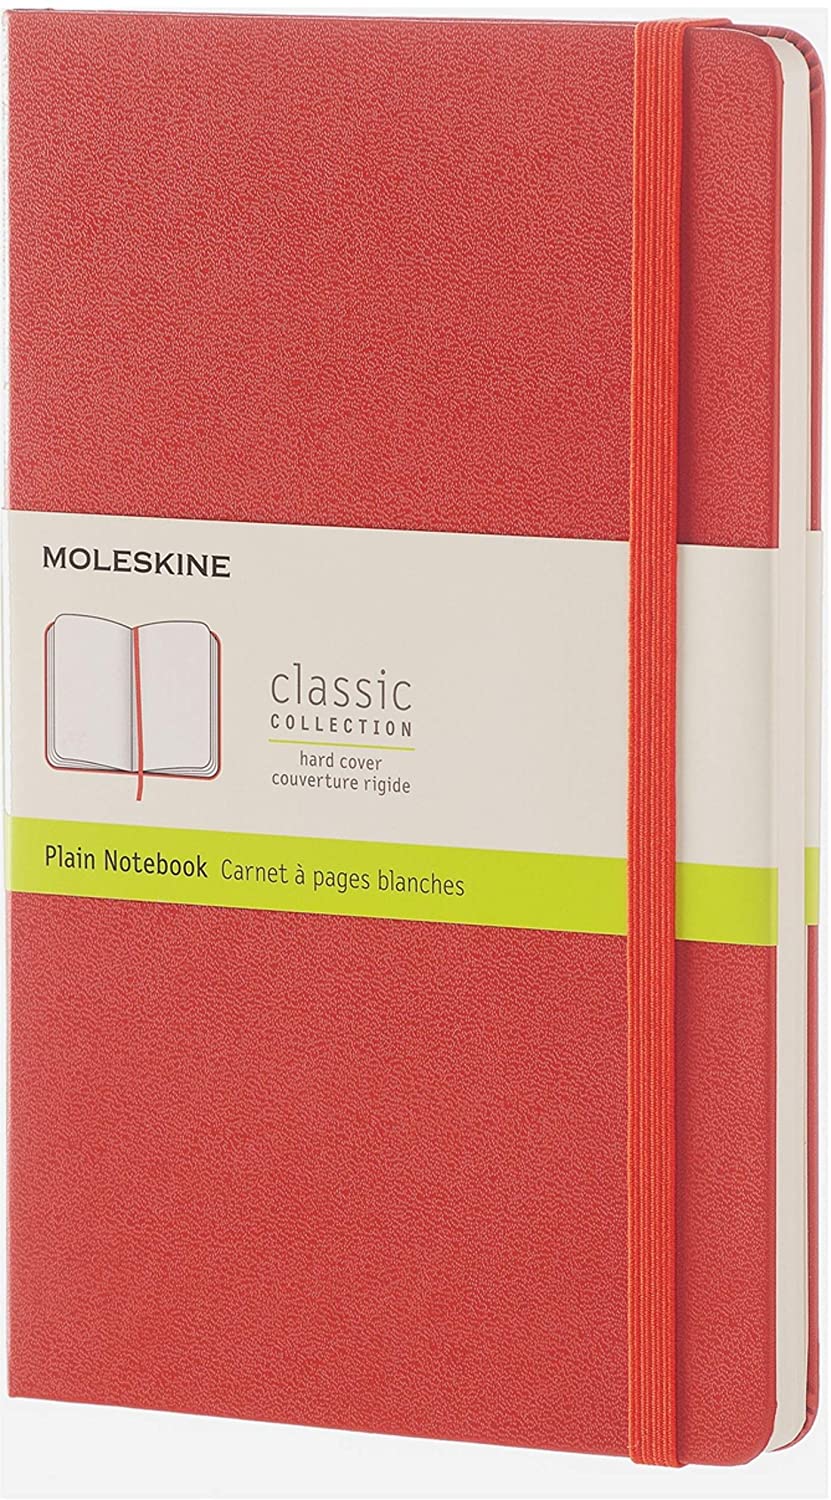 Moleskine Classic Notebook, Large, Plain, Coral Orange, Hard Cover (5 X 8.25) (Other)